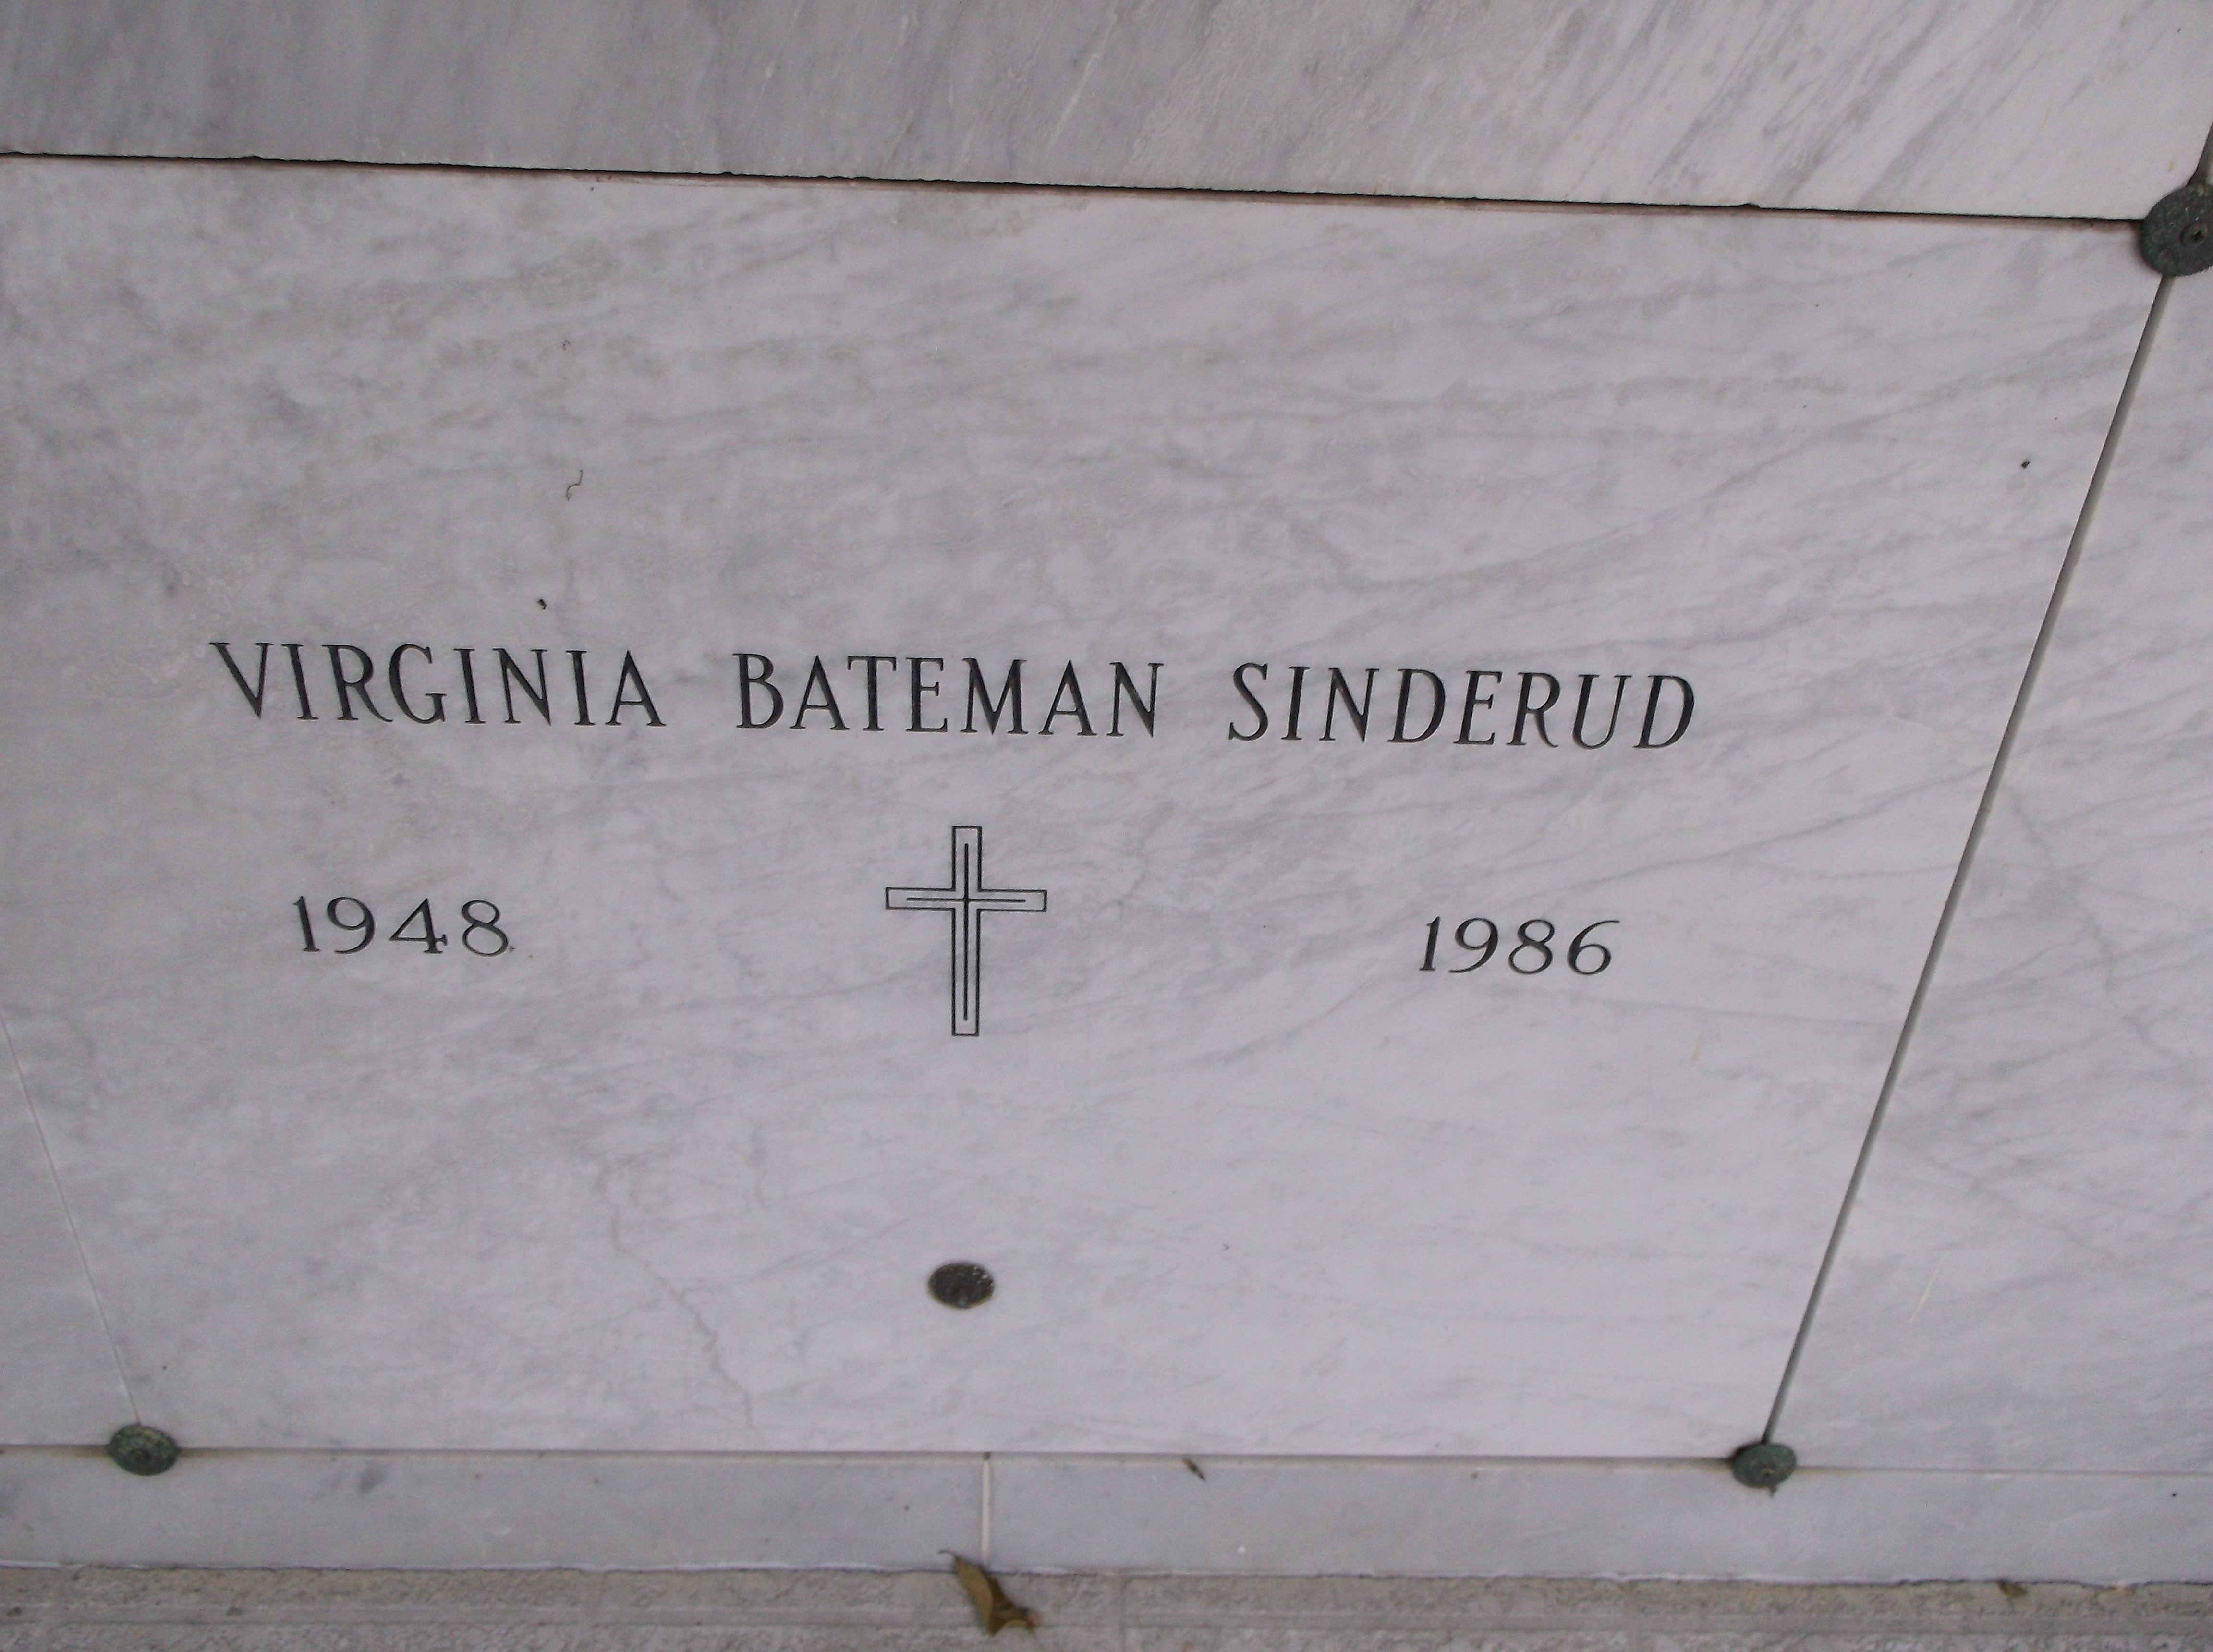 Virginia Bateman Sinderud